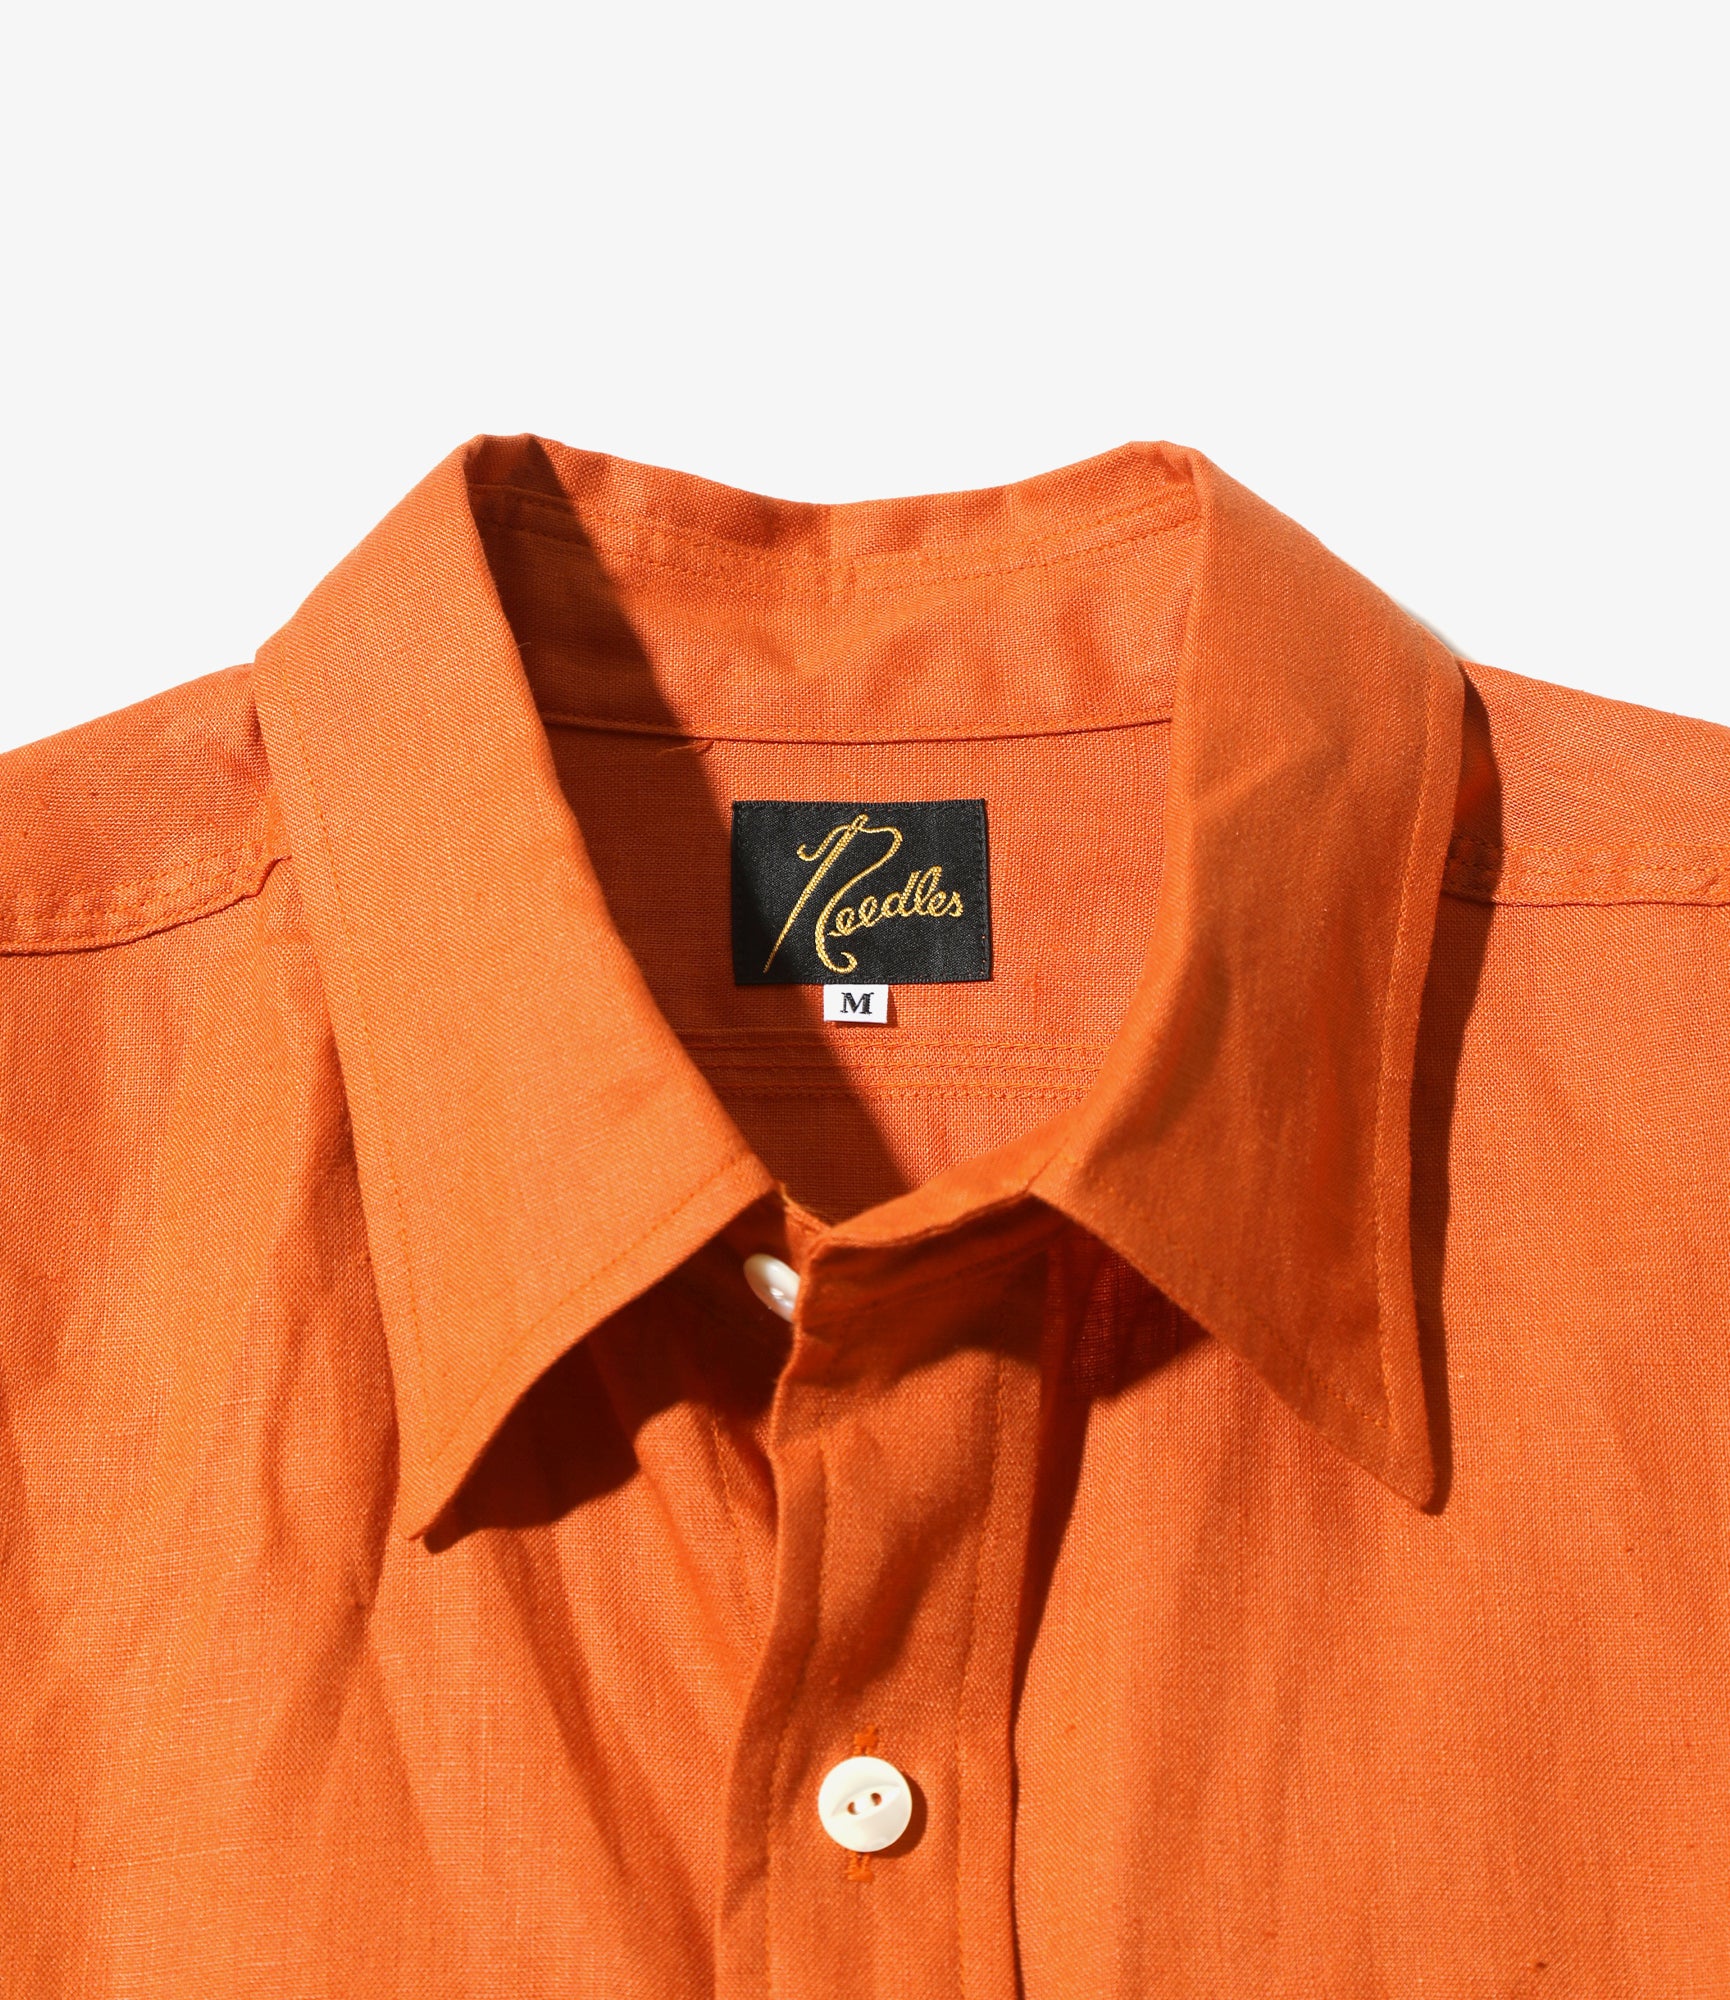 Needles Work Shirt - Linen Canvas - Orange